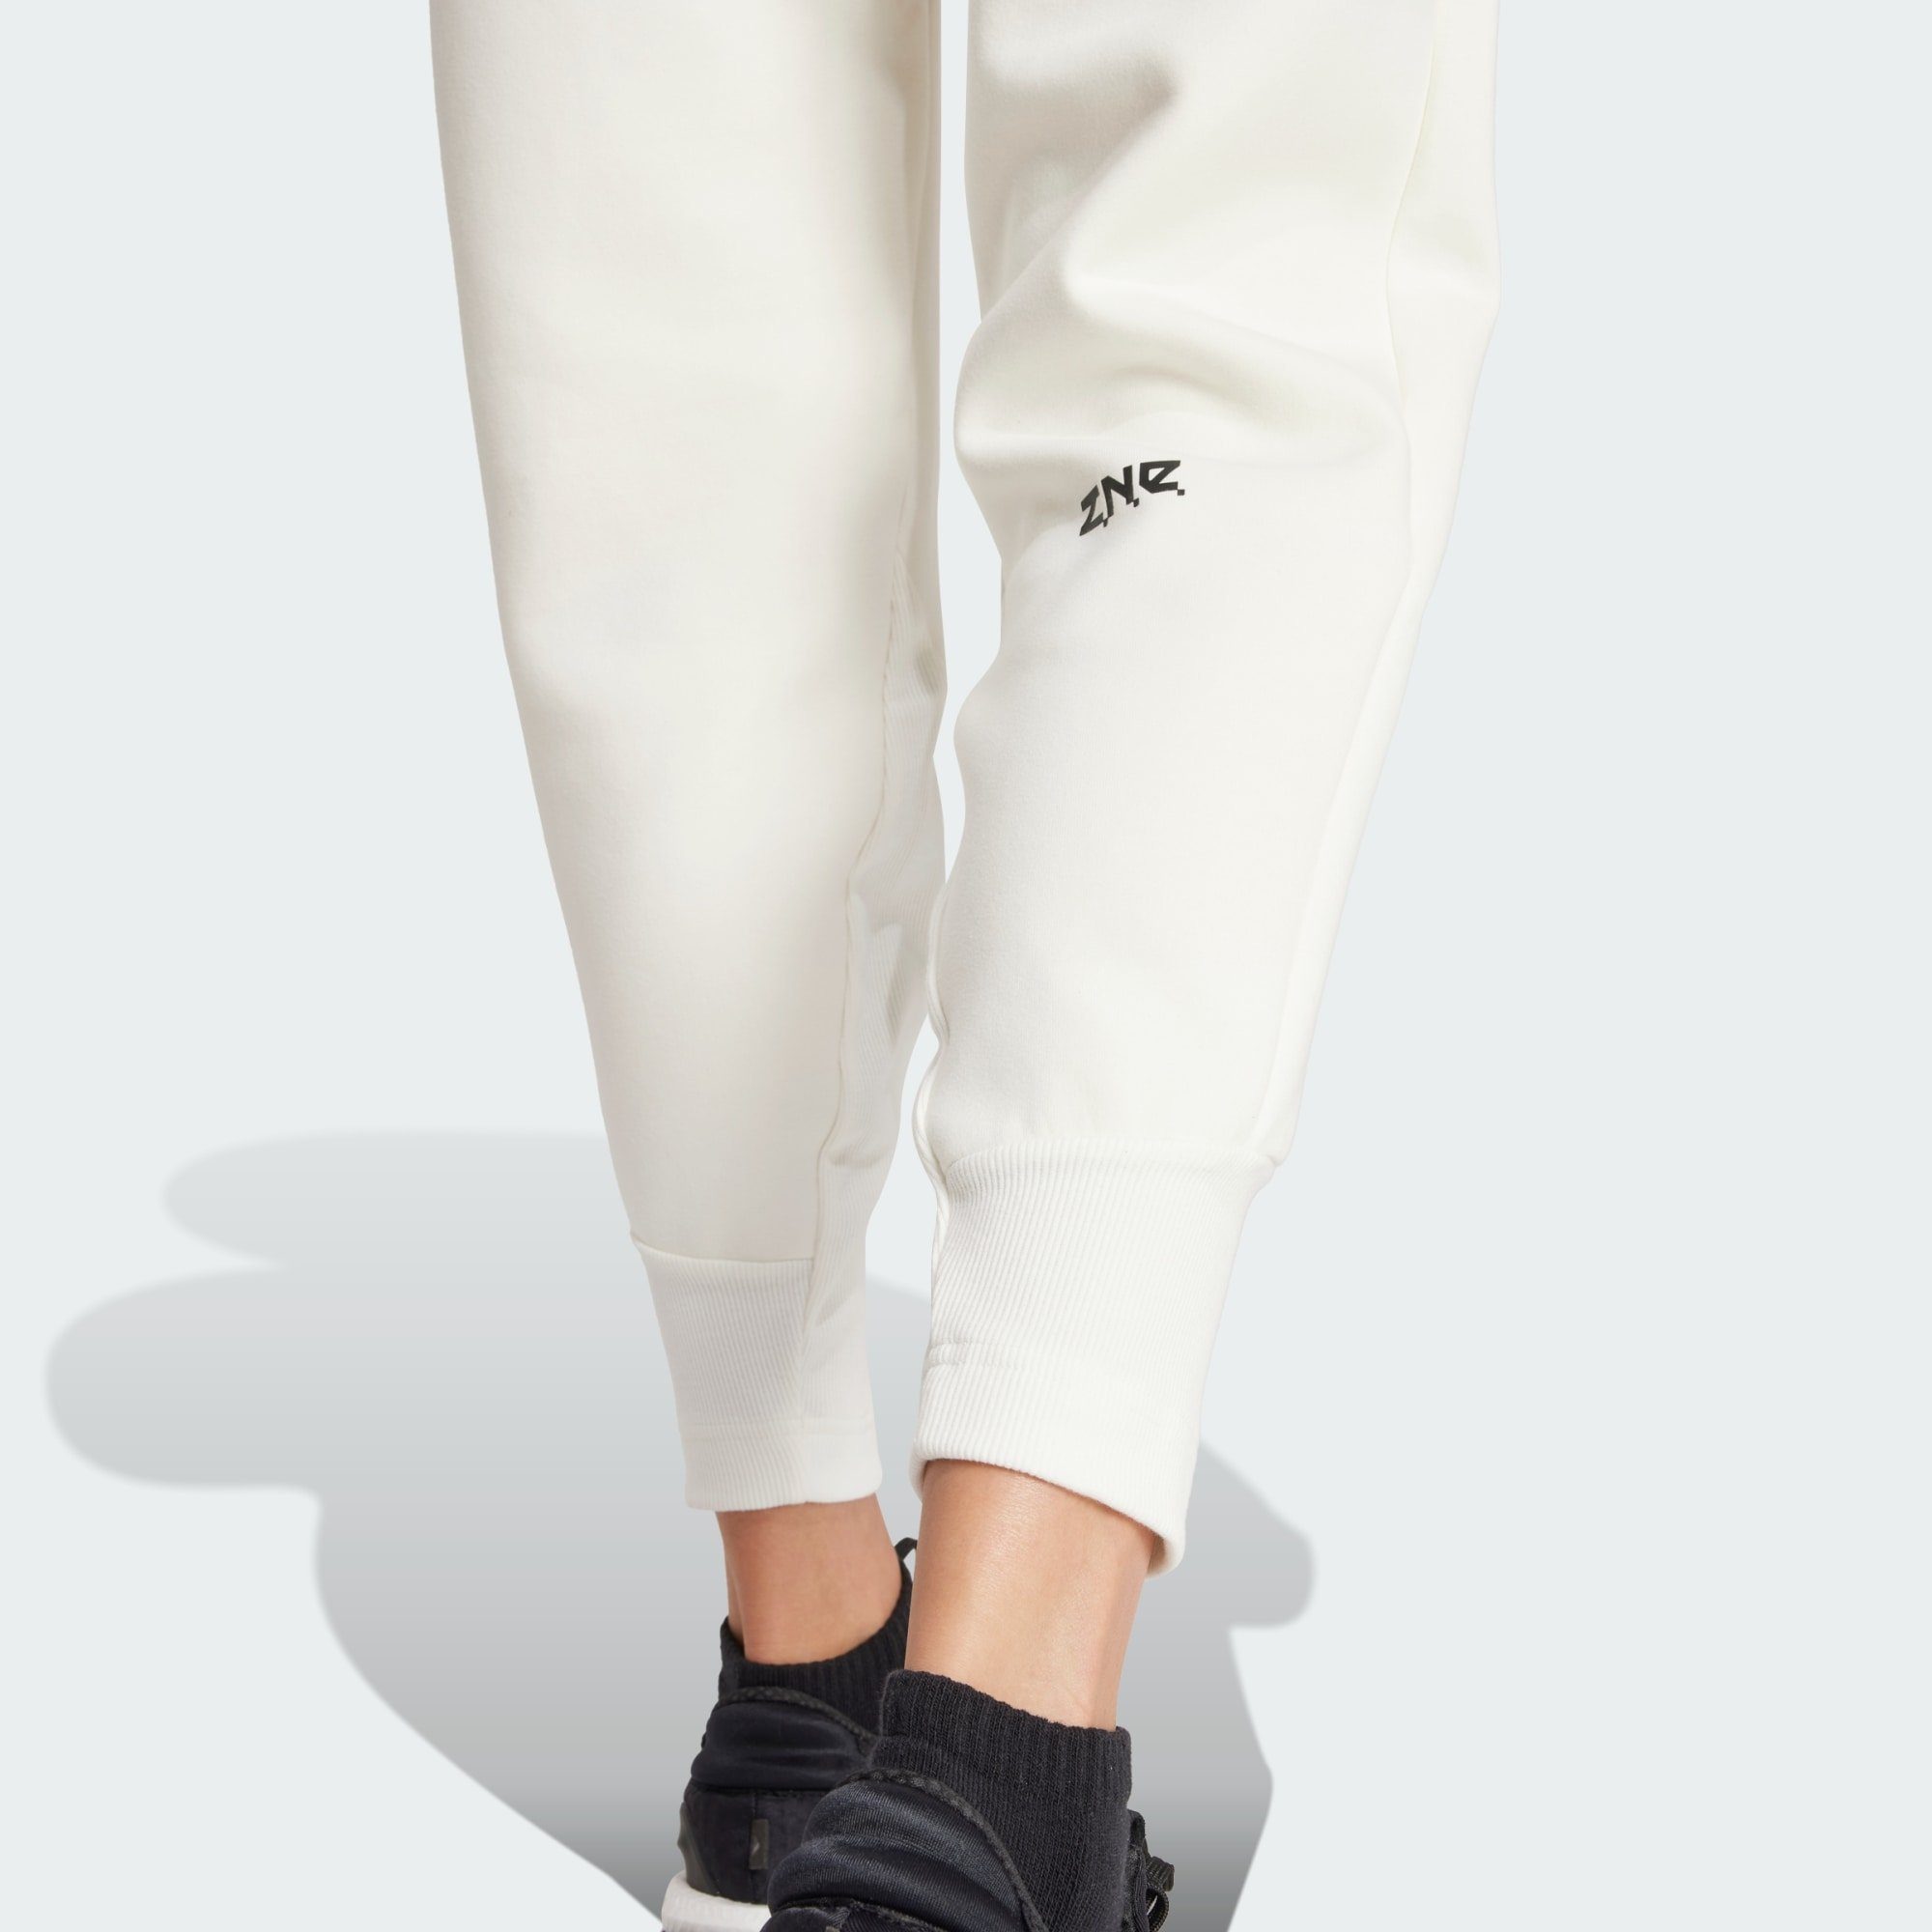 Z.N.E. Sportswear White Off HOSE adidas Jogginghose